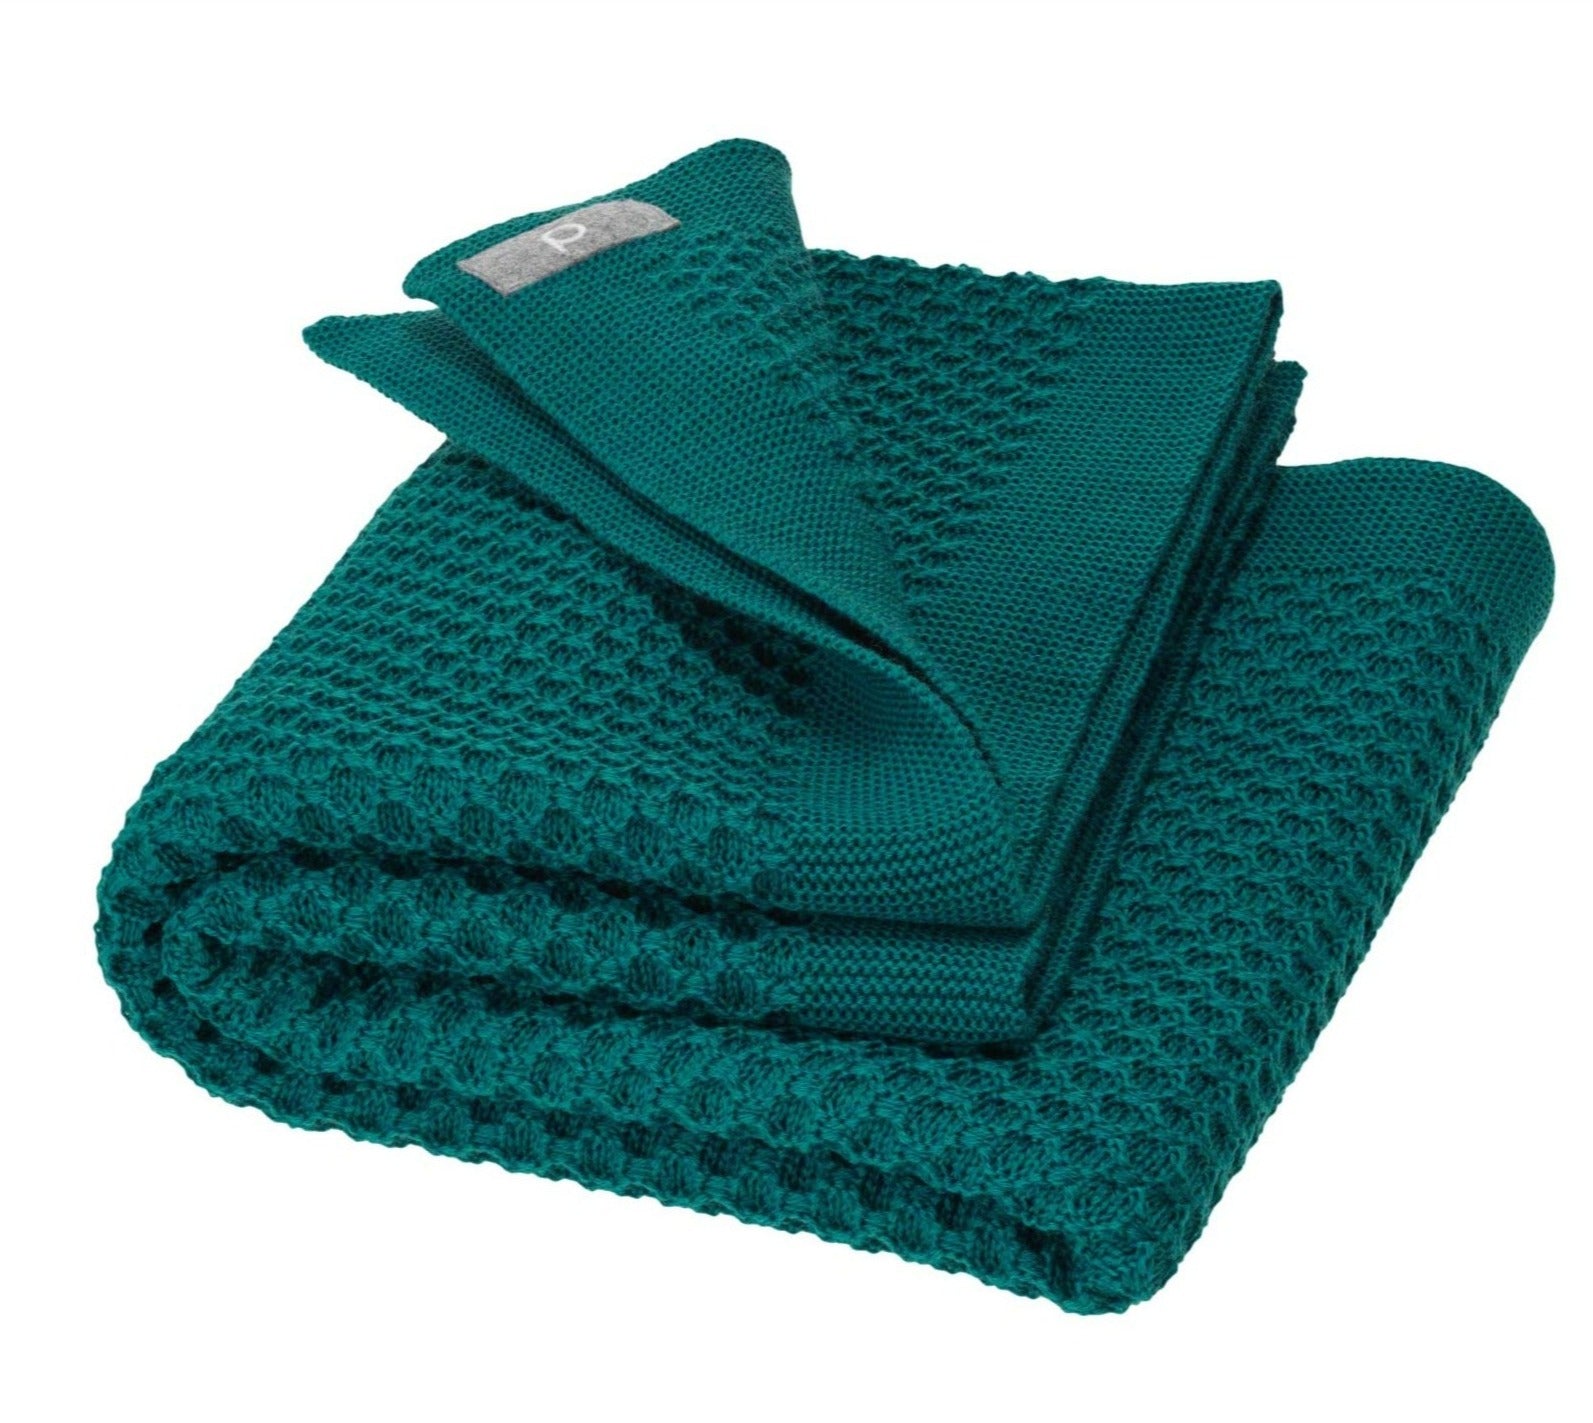 Disana's honeycomb blanket in pacific. Made of 100% soft merino wool.